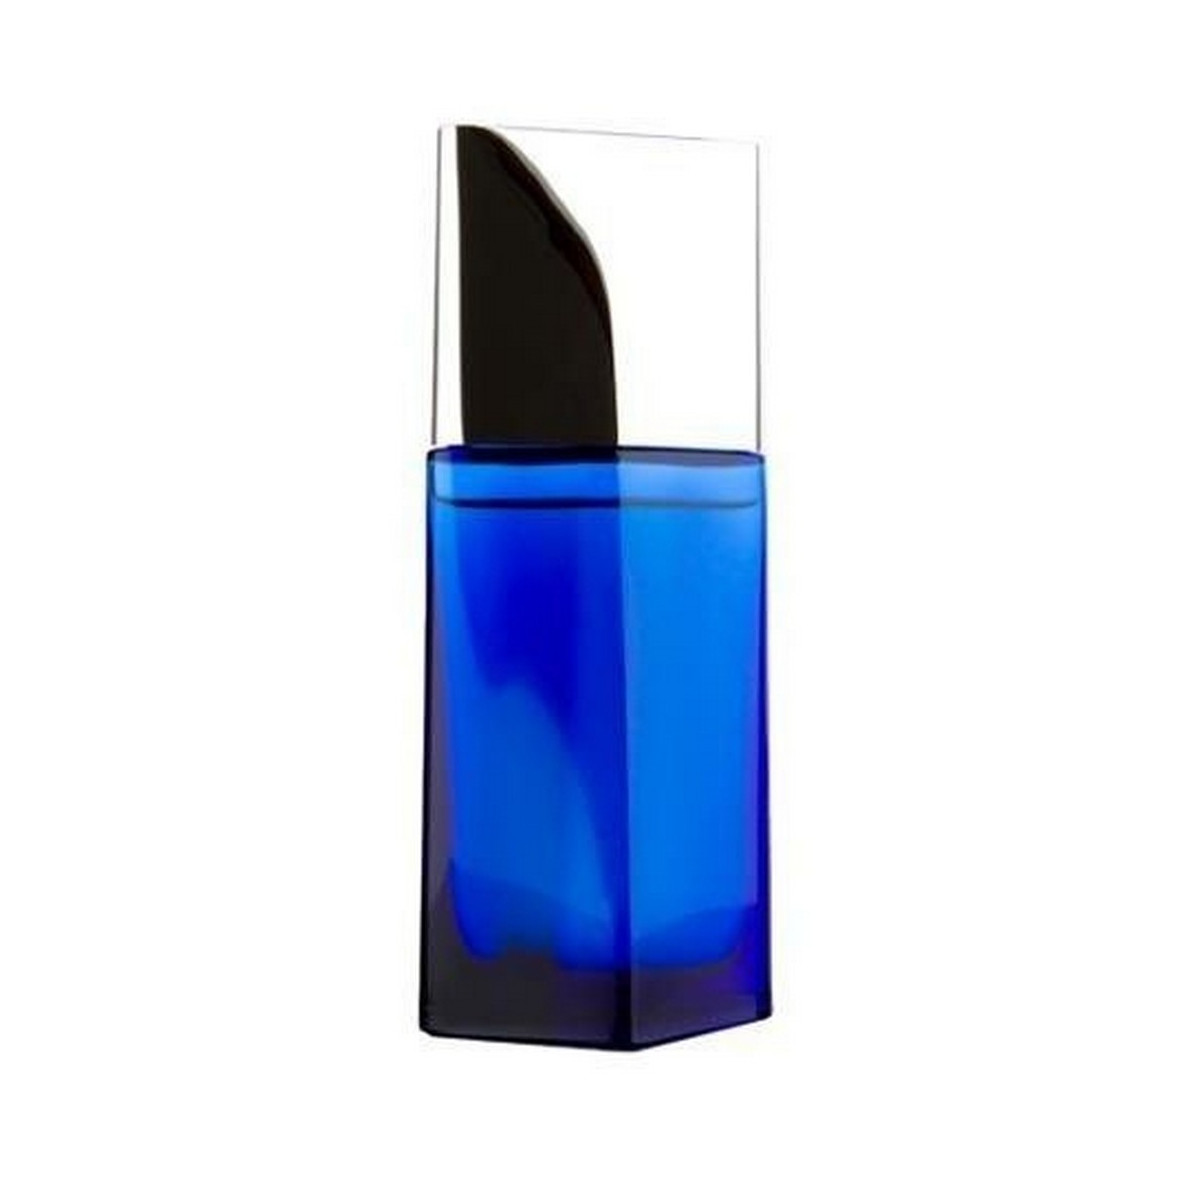 Versace Man EAU Fraiche by Versace 3.4 oz Perfumed Deodorant Spray